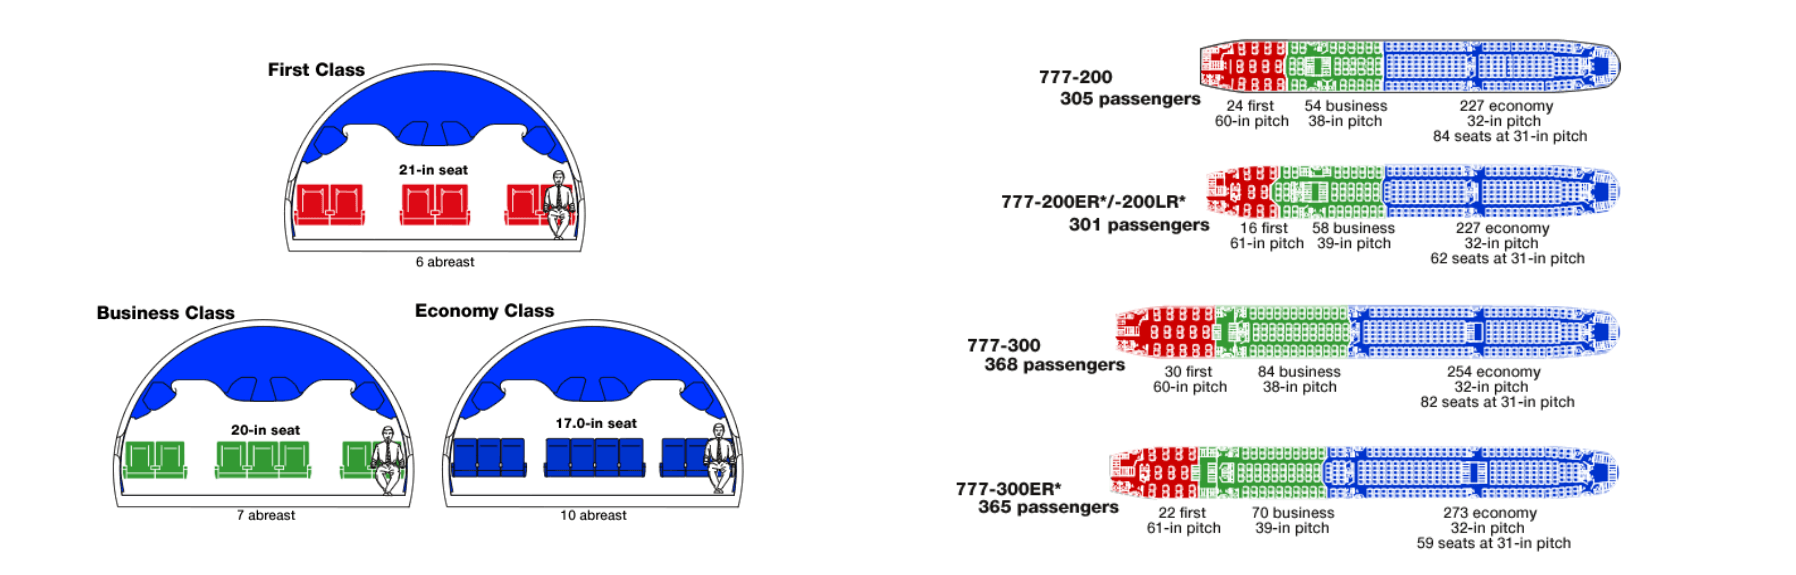 Boeing 777 seat map